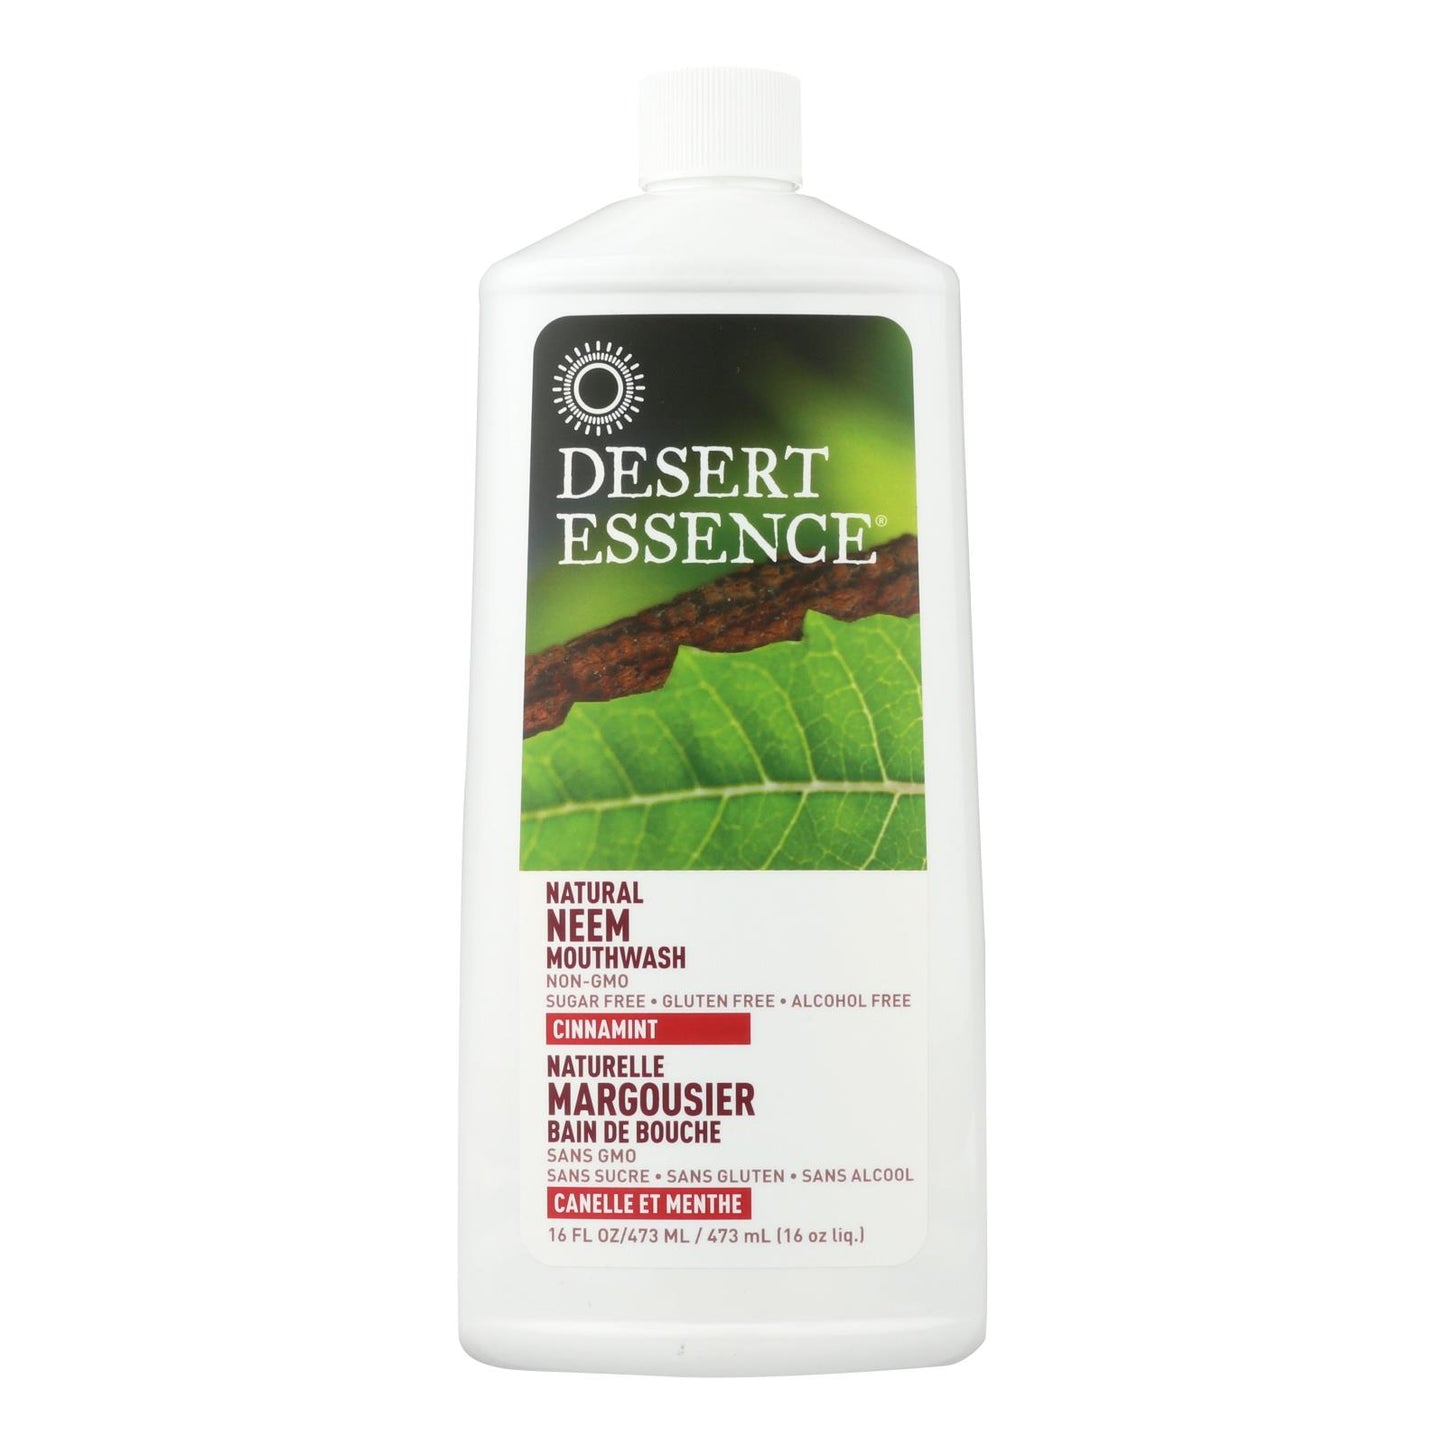 
                  
                    Desert Essence Natural Neem Mouthwash Cinnamint - 16 fl oz.
                  
                